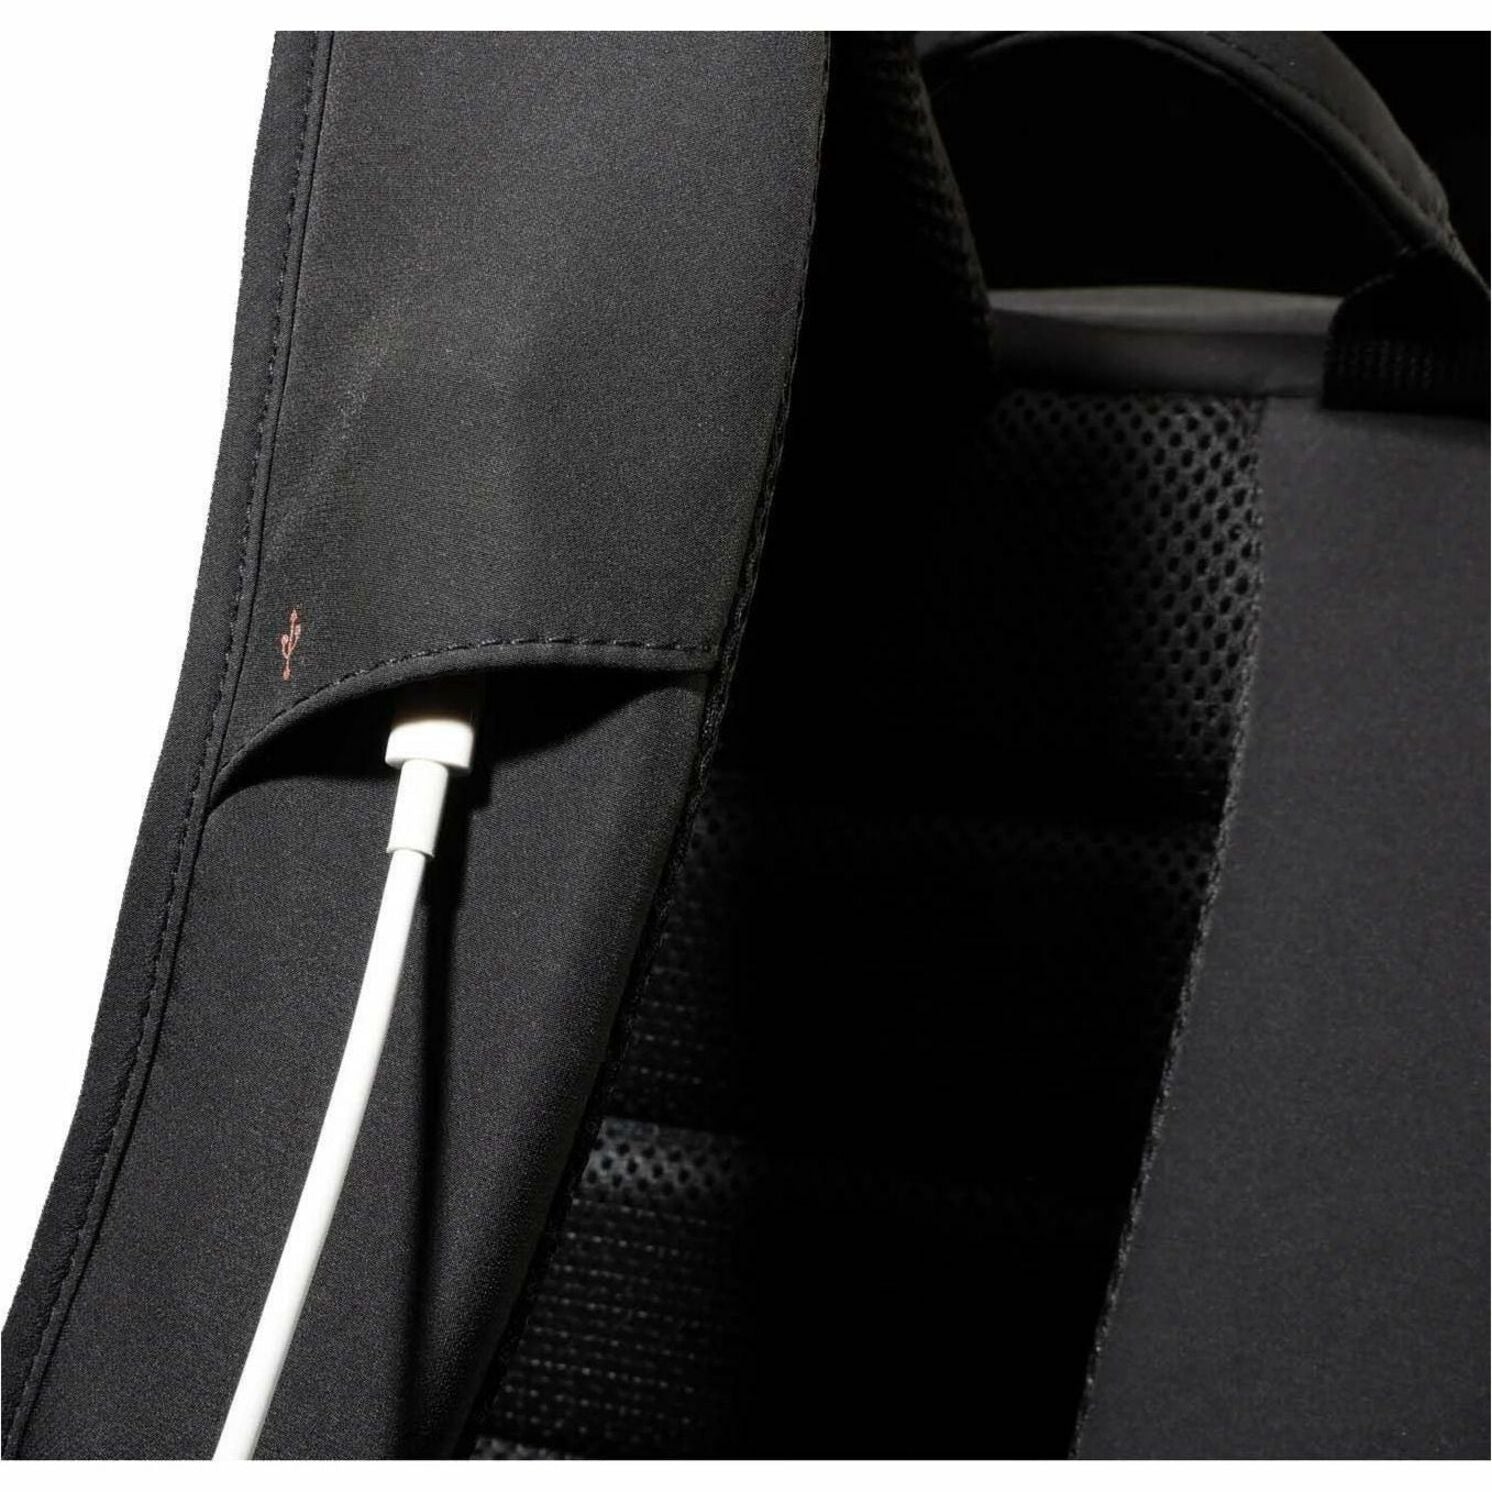 Swissdigital Design SD1645-01 KATY ROSE NG Carrying Case, Ergonomic Design, LED Light, Keyclip, Padded Compartment, RFID Blocking Pocket, USB Charging Port